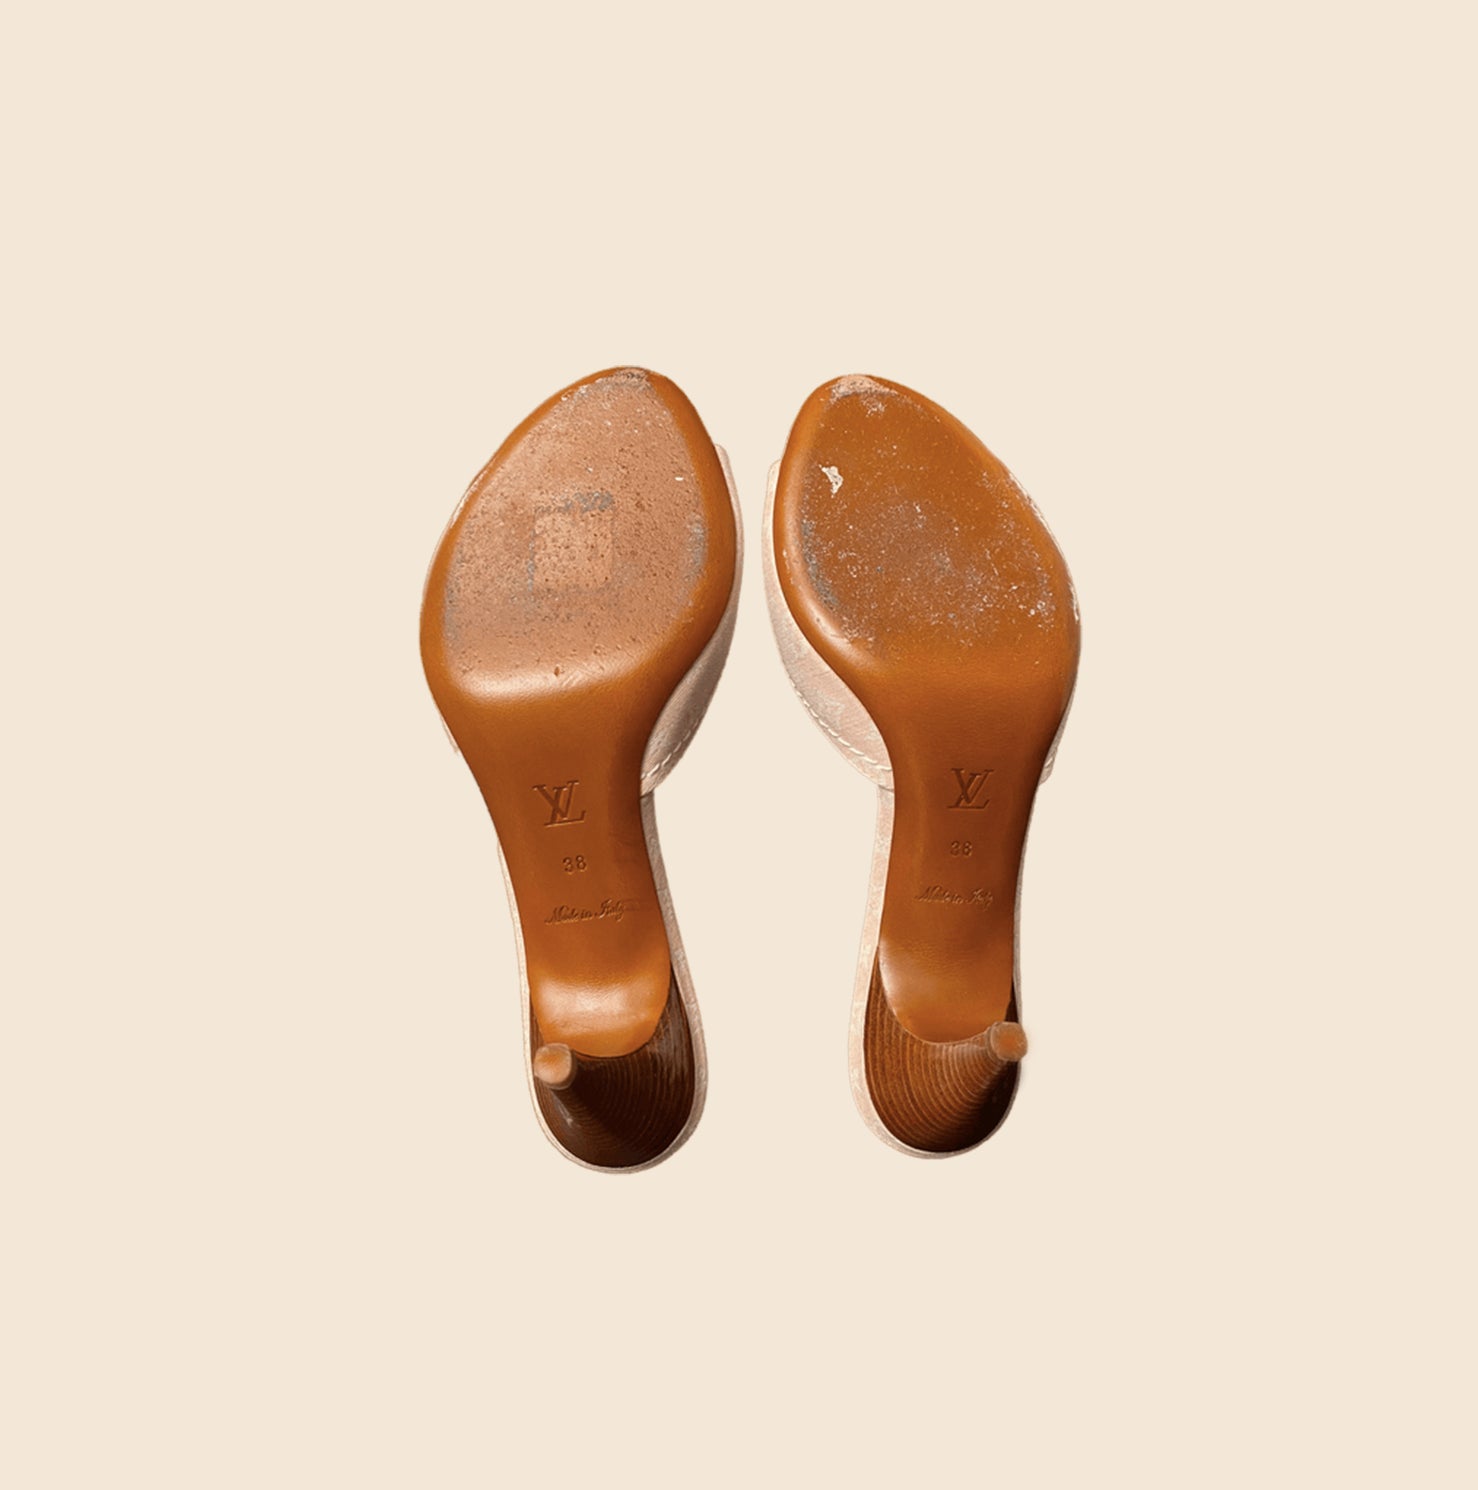 NWB Louis Vuitton Monogram Sandals Heels Sz. 39